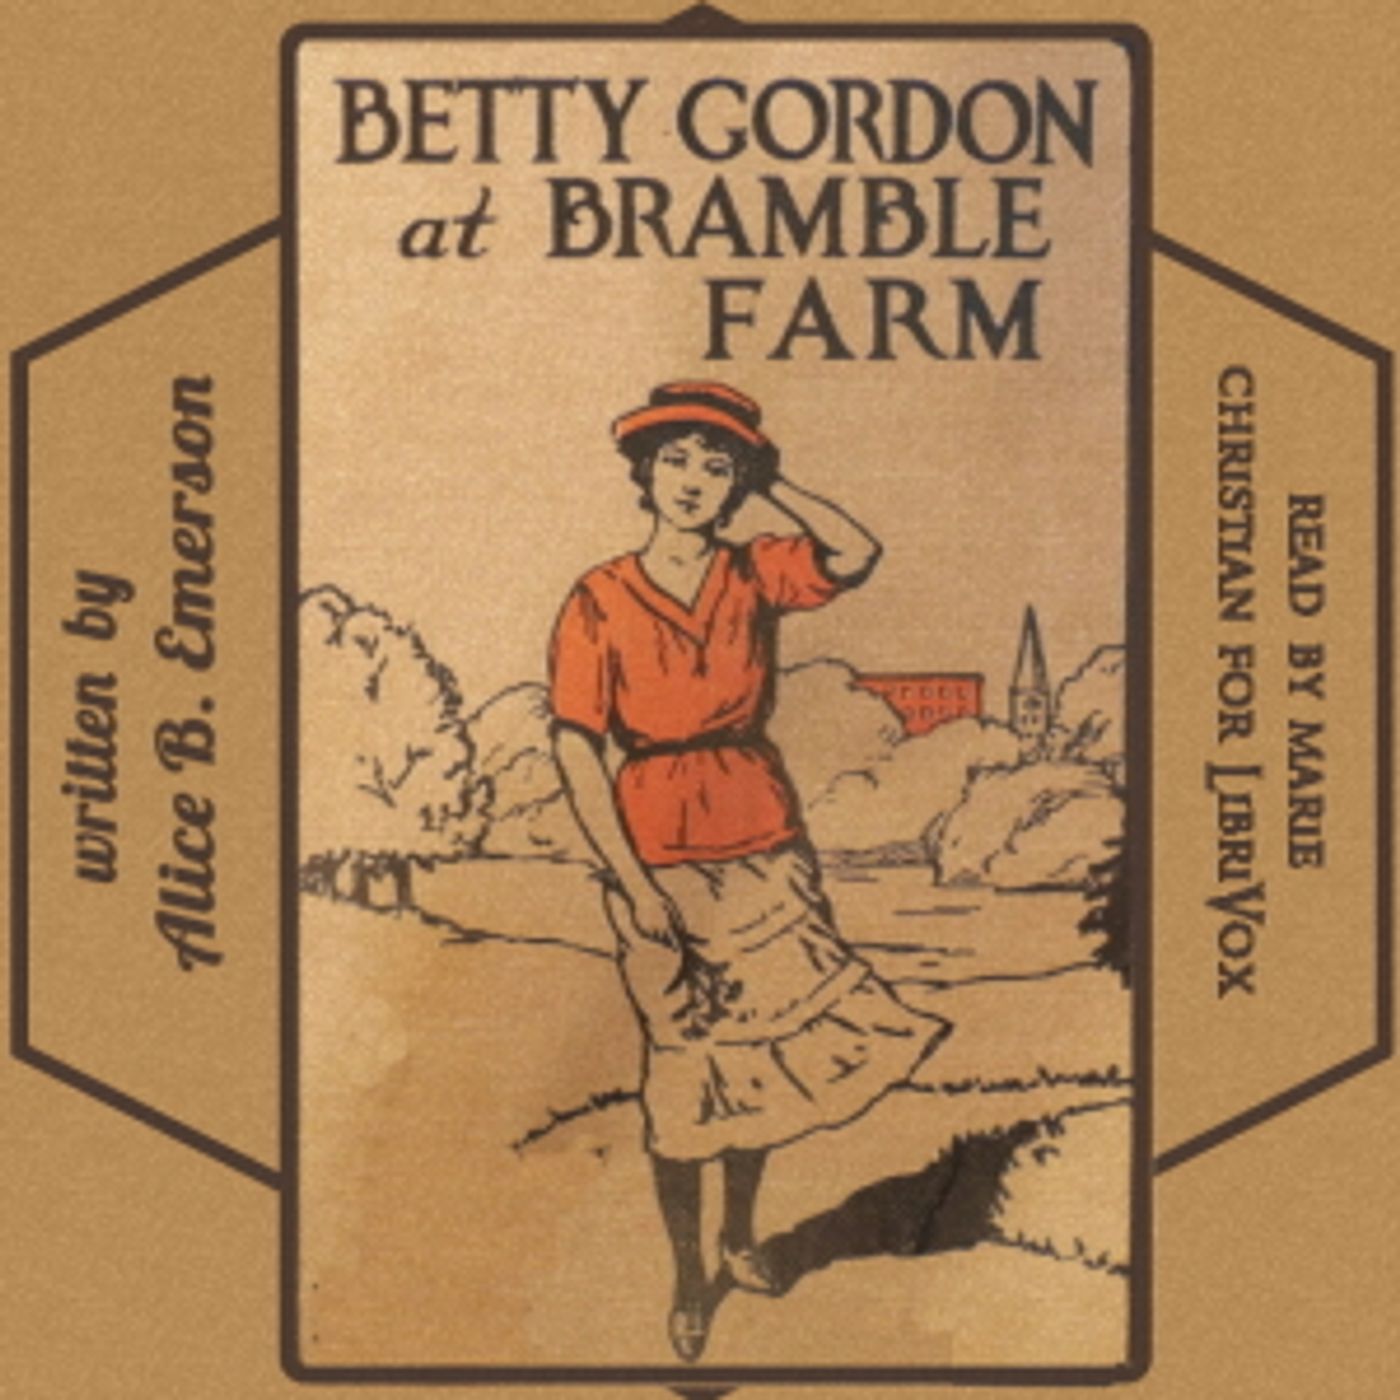 Betty Gordon at Bramble Farm by Alice B. Emerson